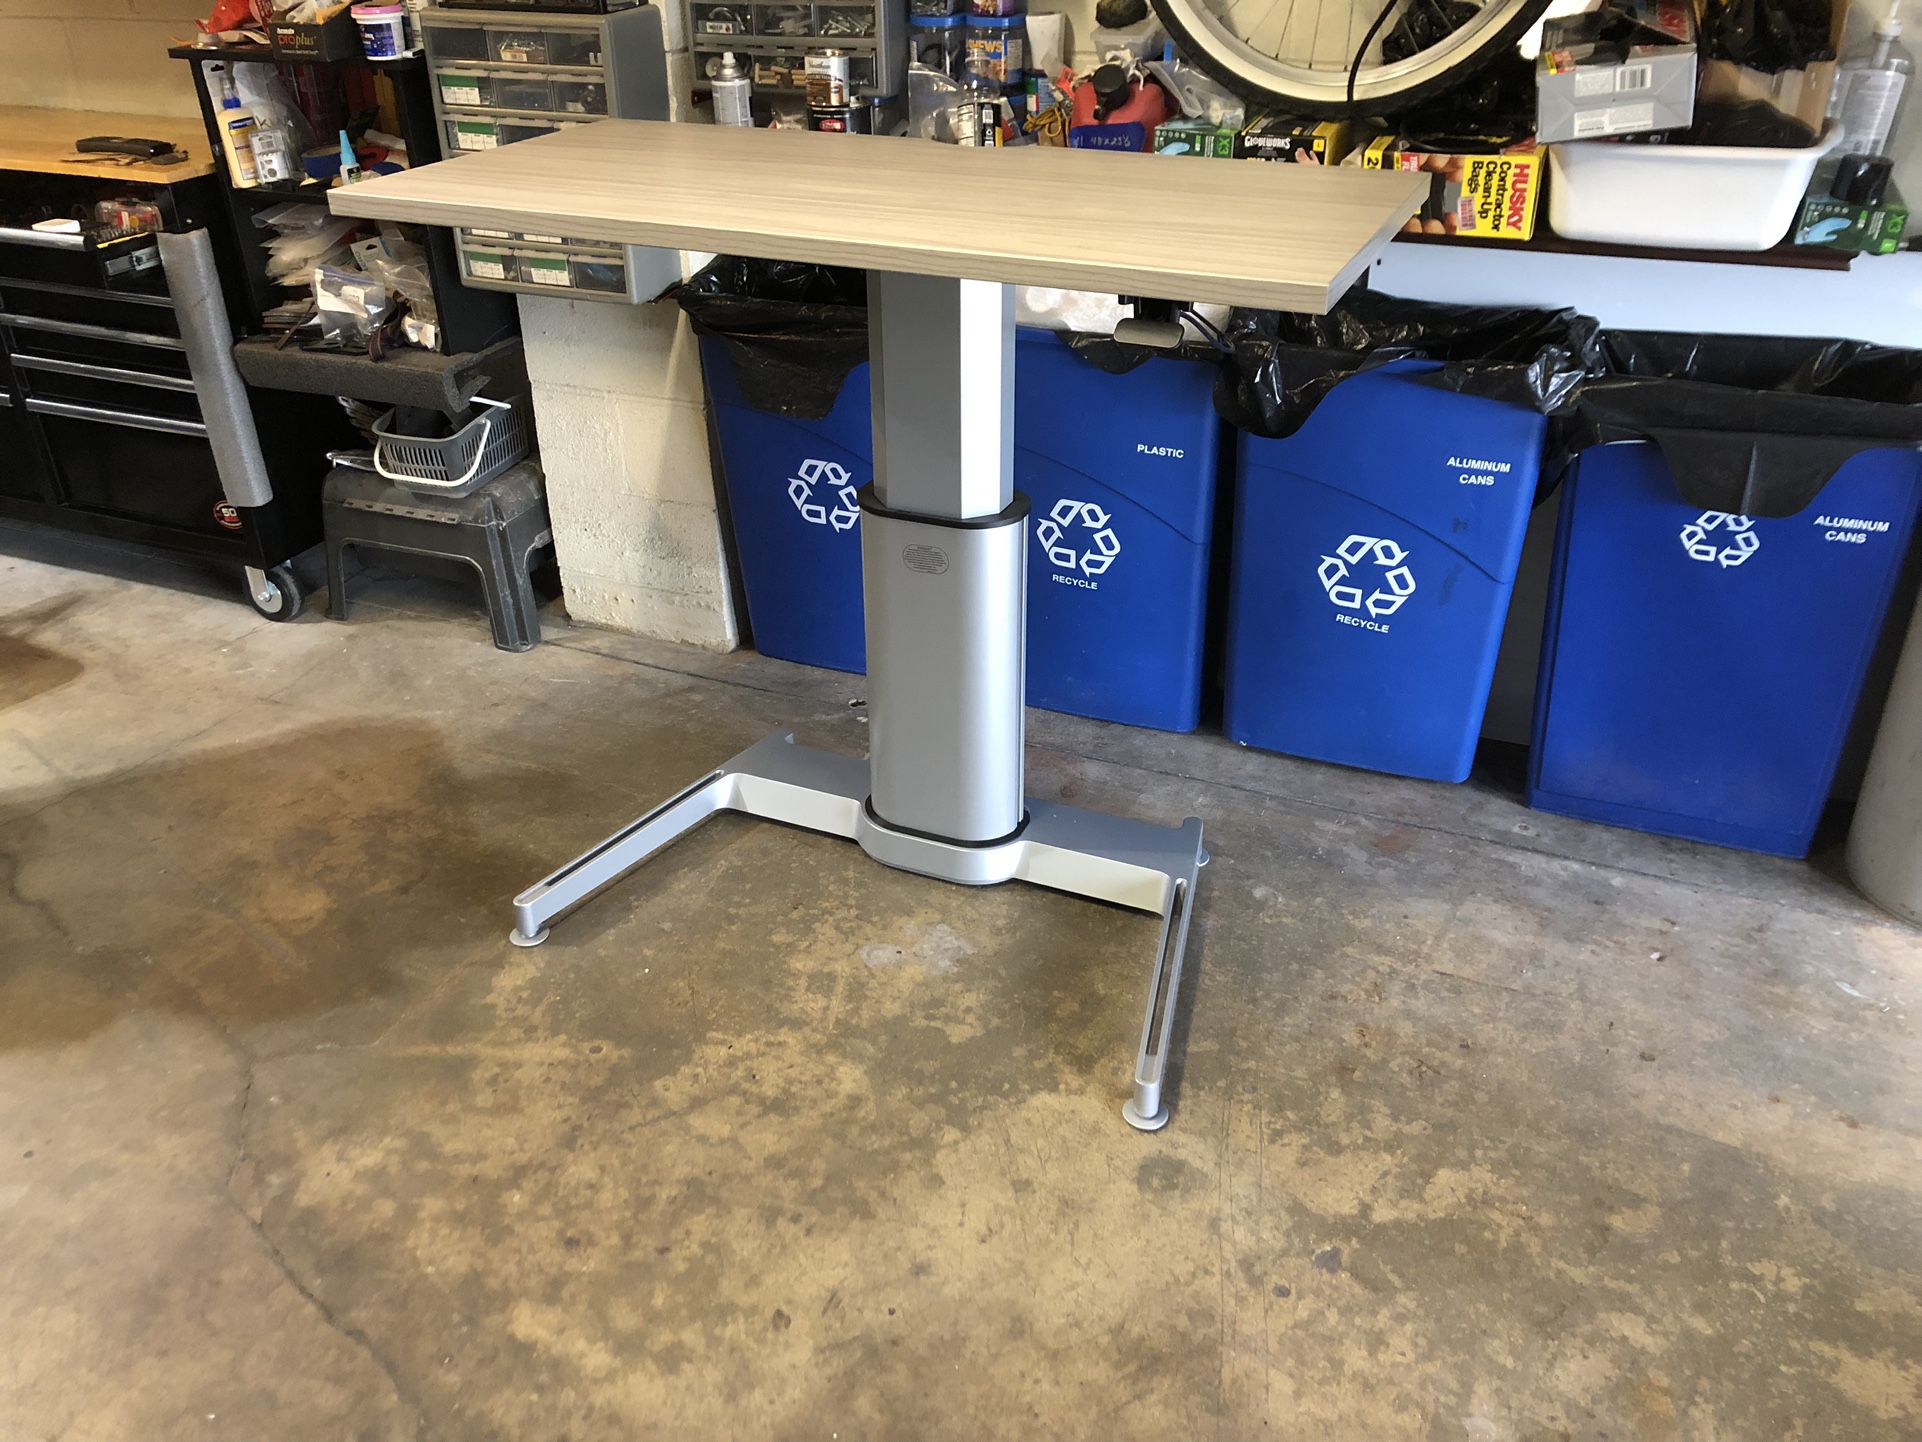 Height Adjustable Desk 